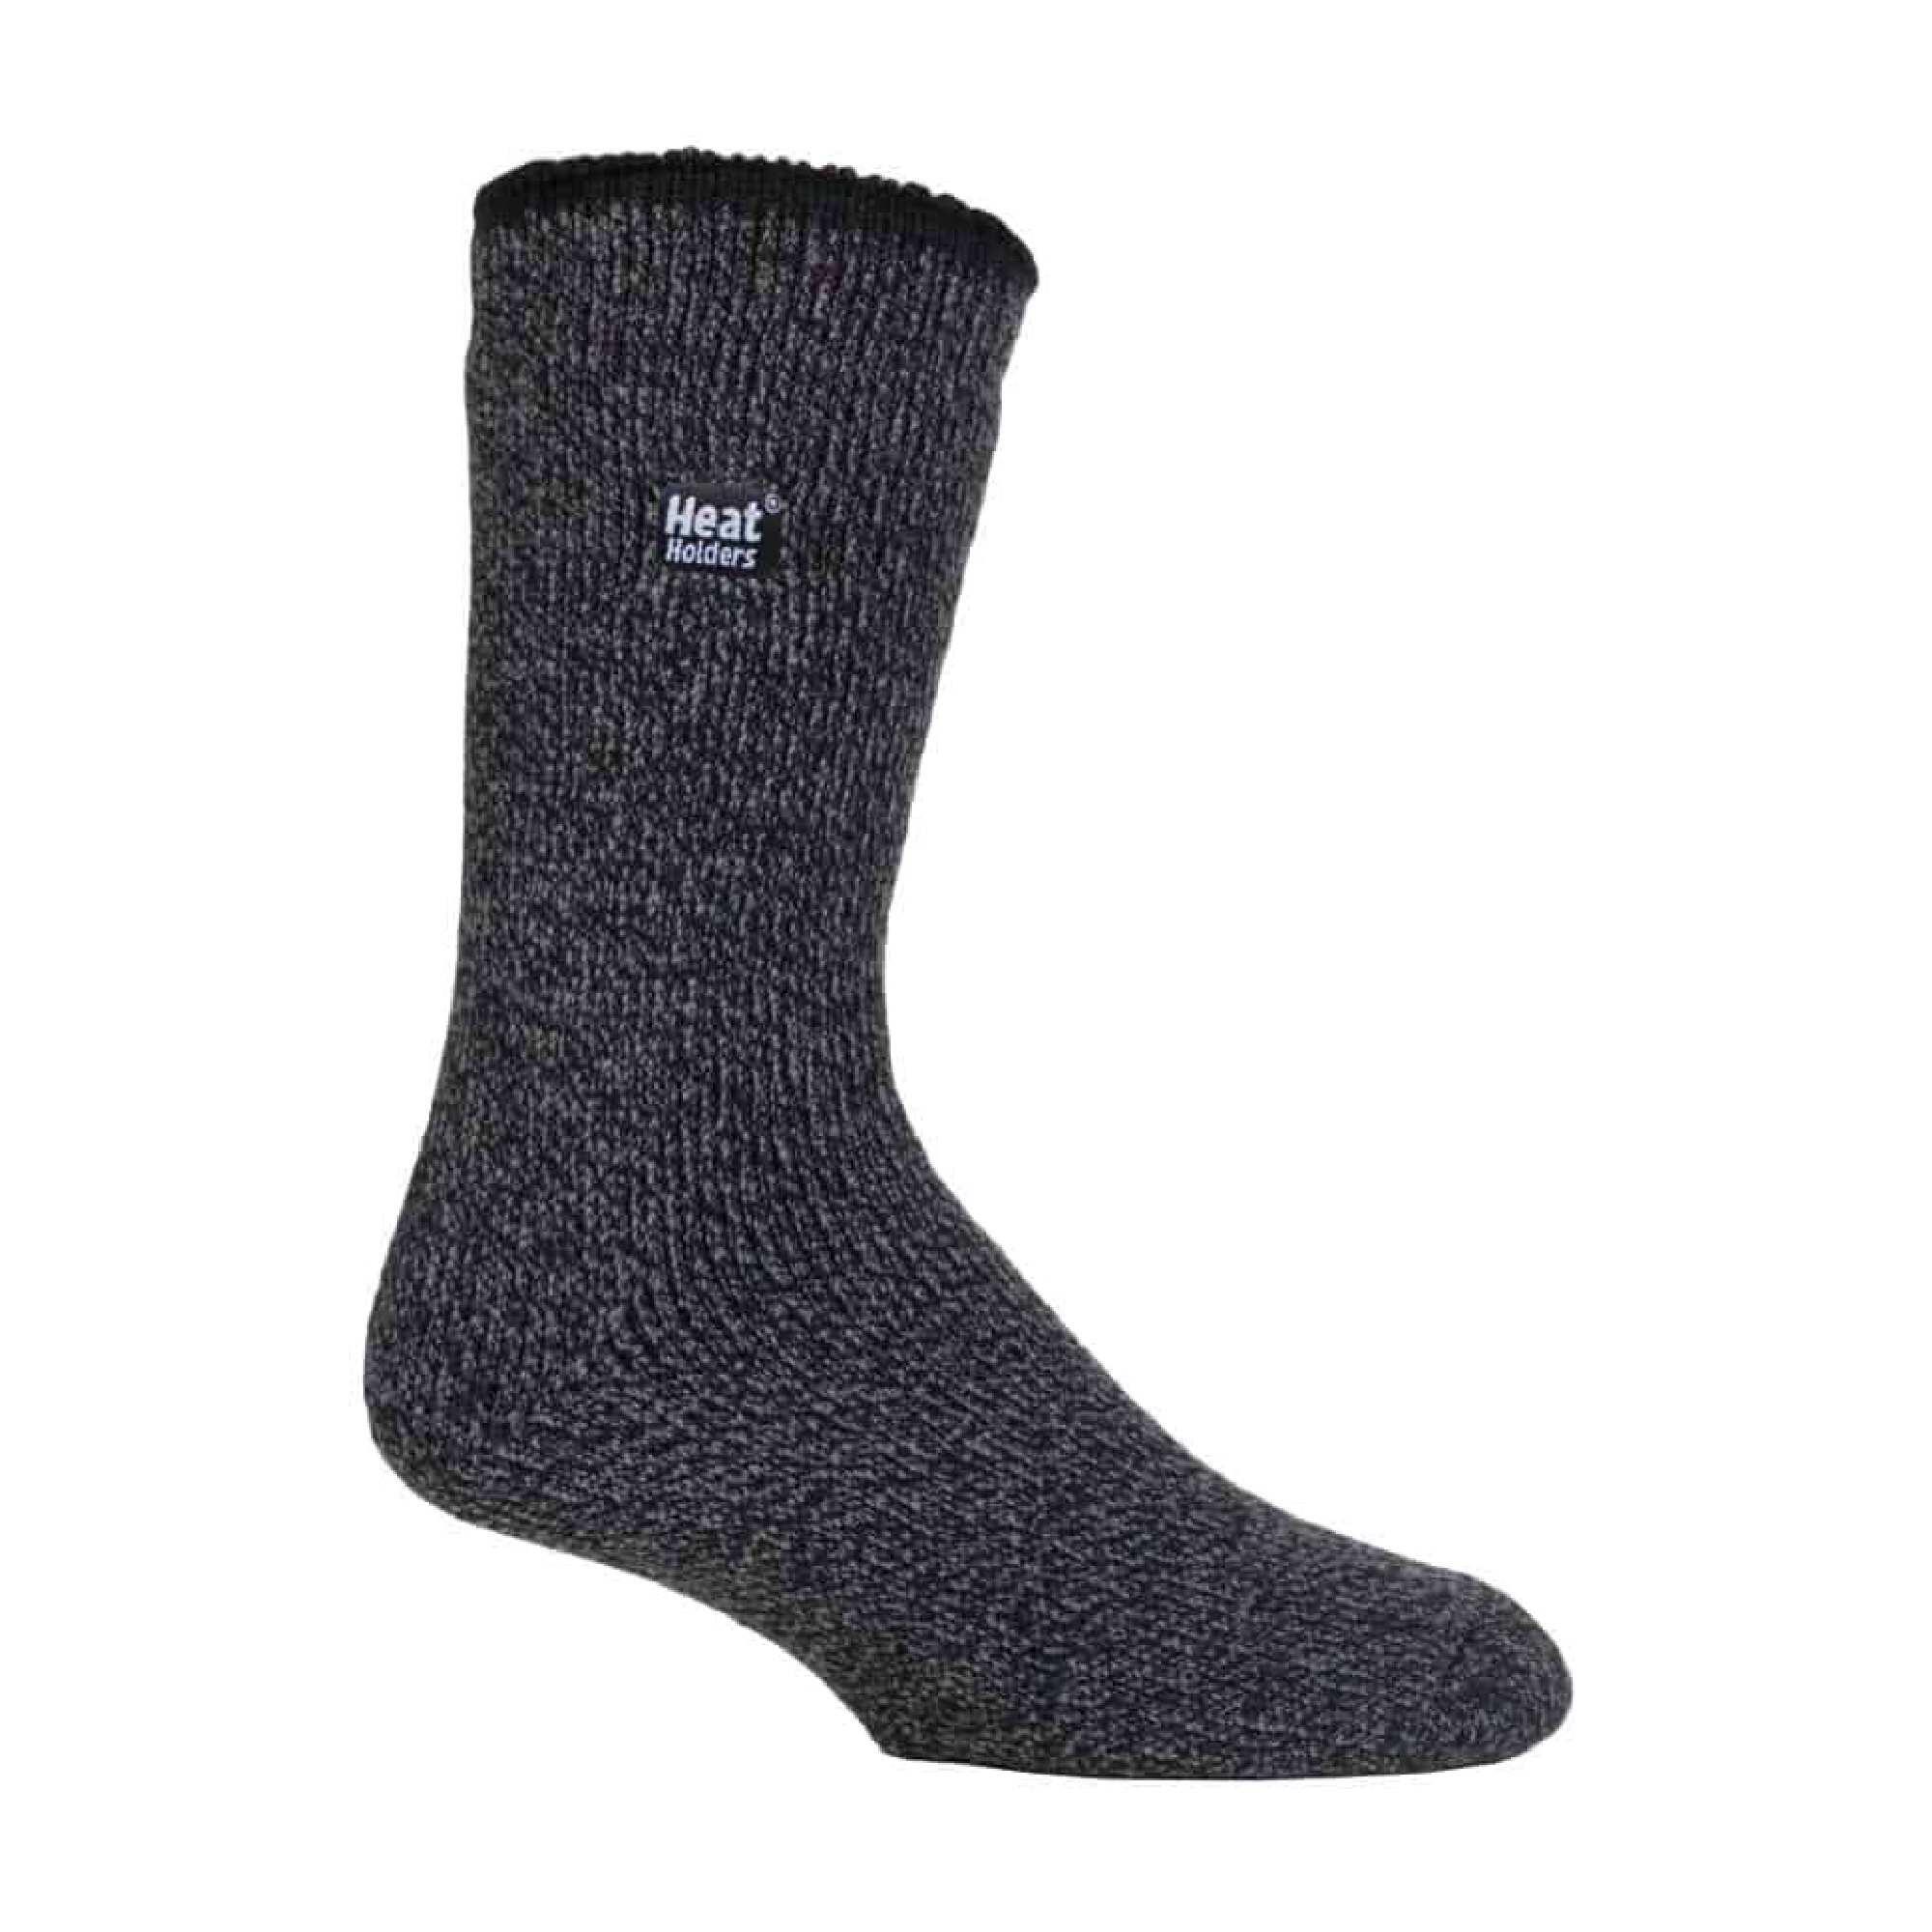 Mens Winter Merino Wool Thermal Socks with Reinforced Heel and Toe 1/6